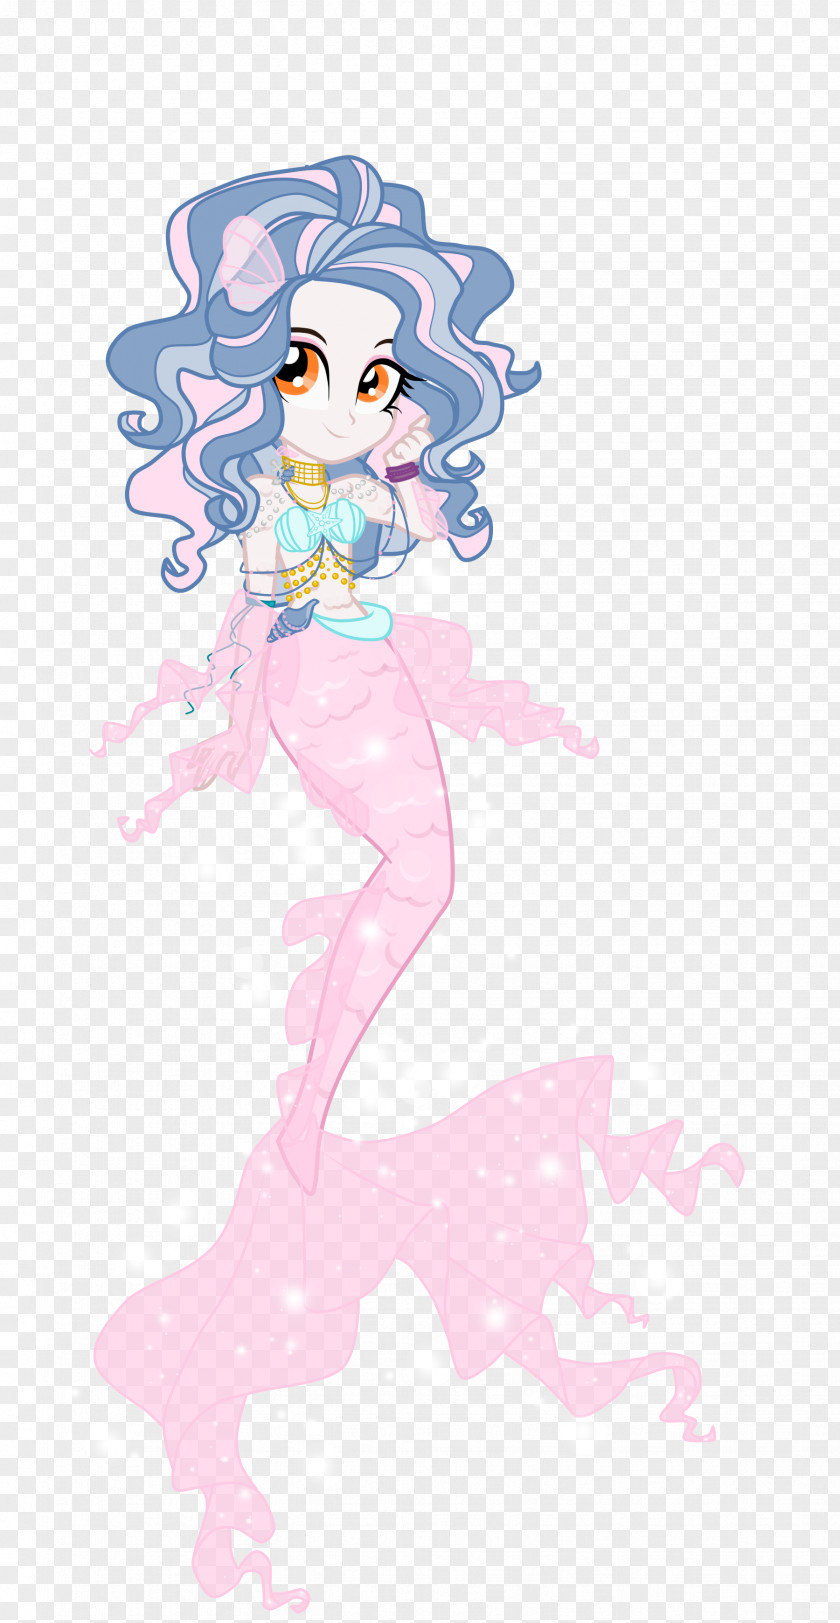 Mermaid Vertebrate Fashion Illustration Clip Art PNG